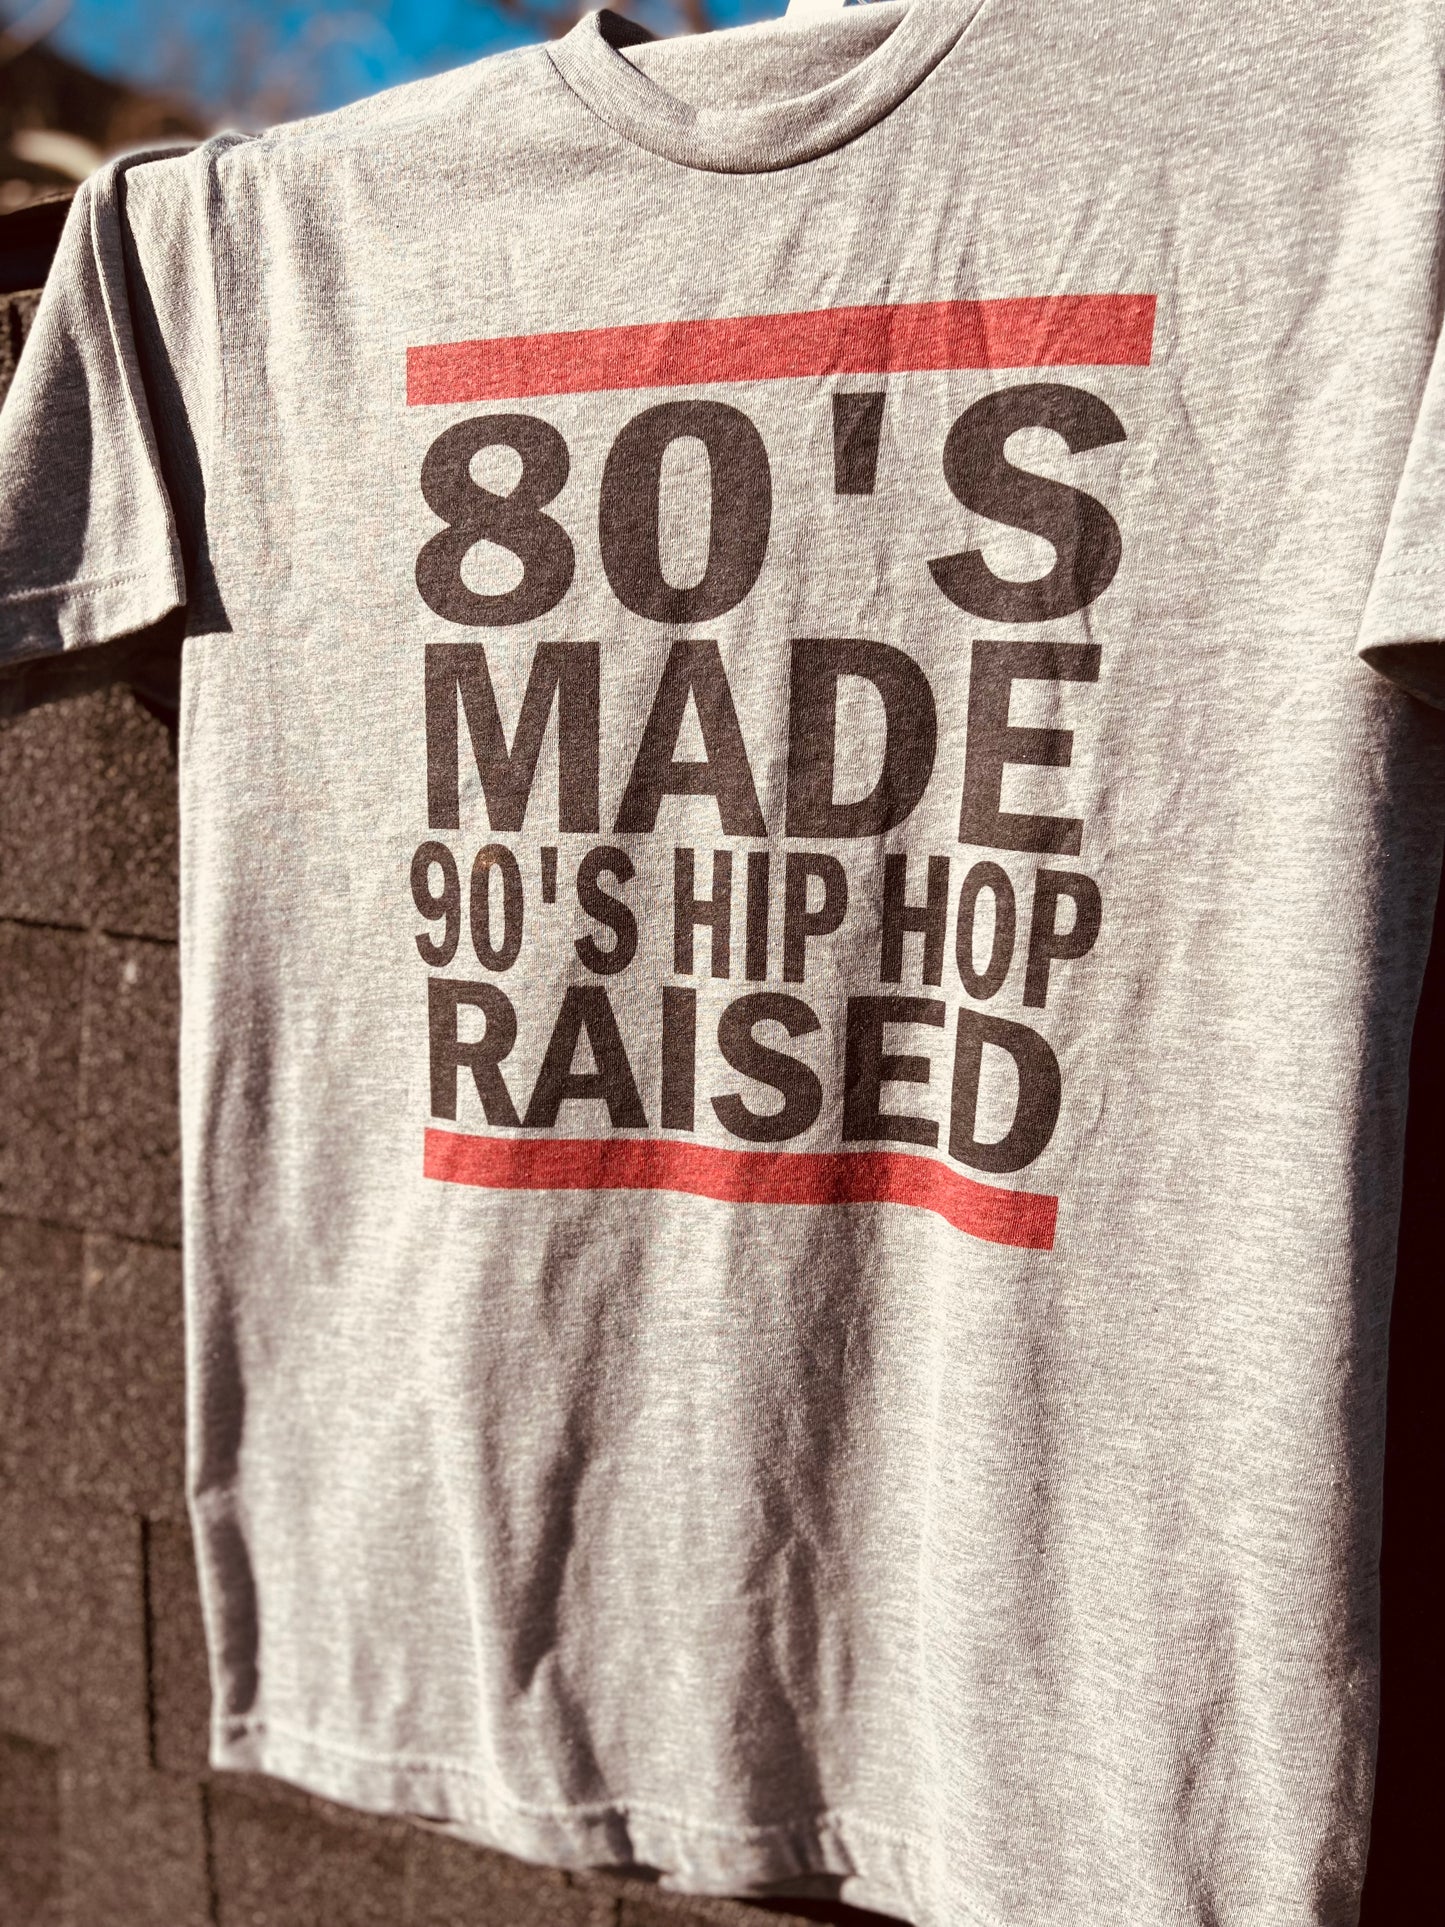 80’s Made, 90’s Hip Hop Raised